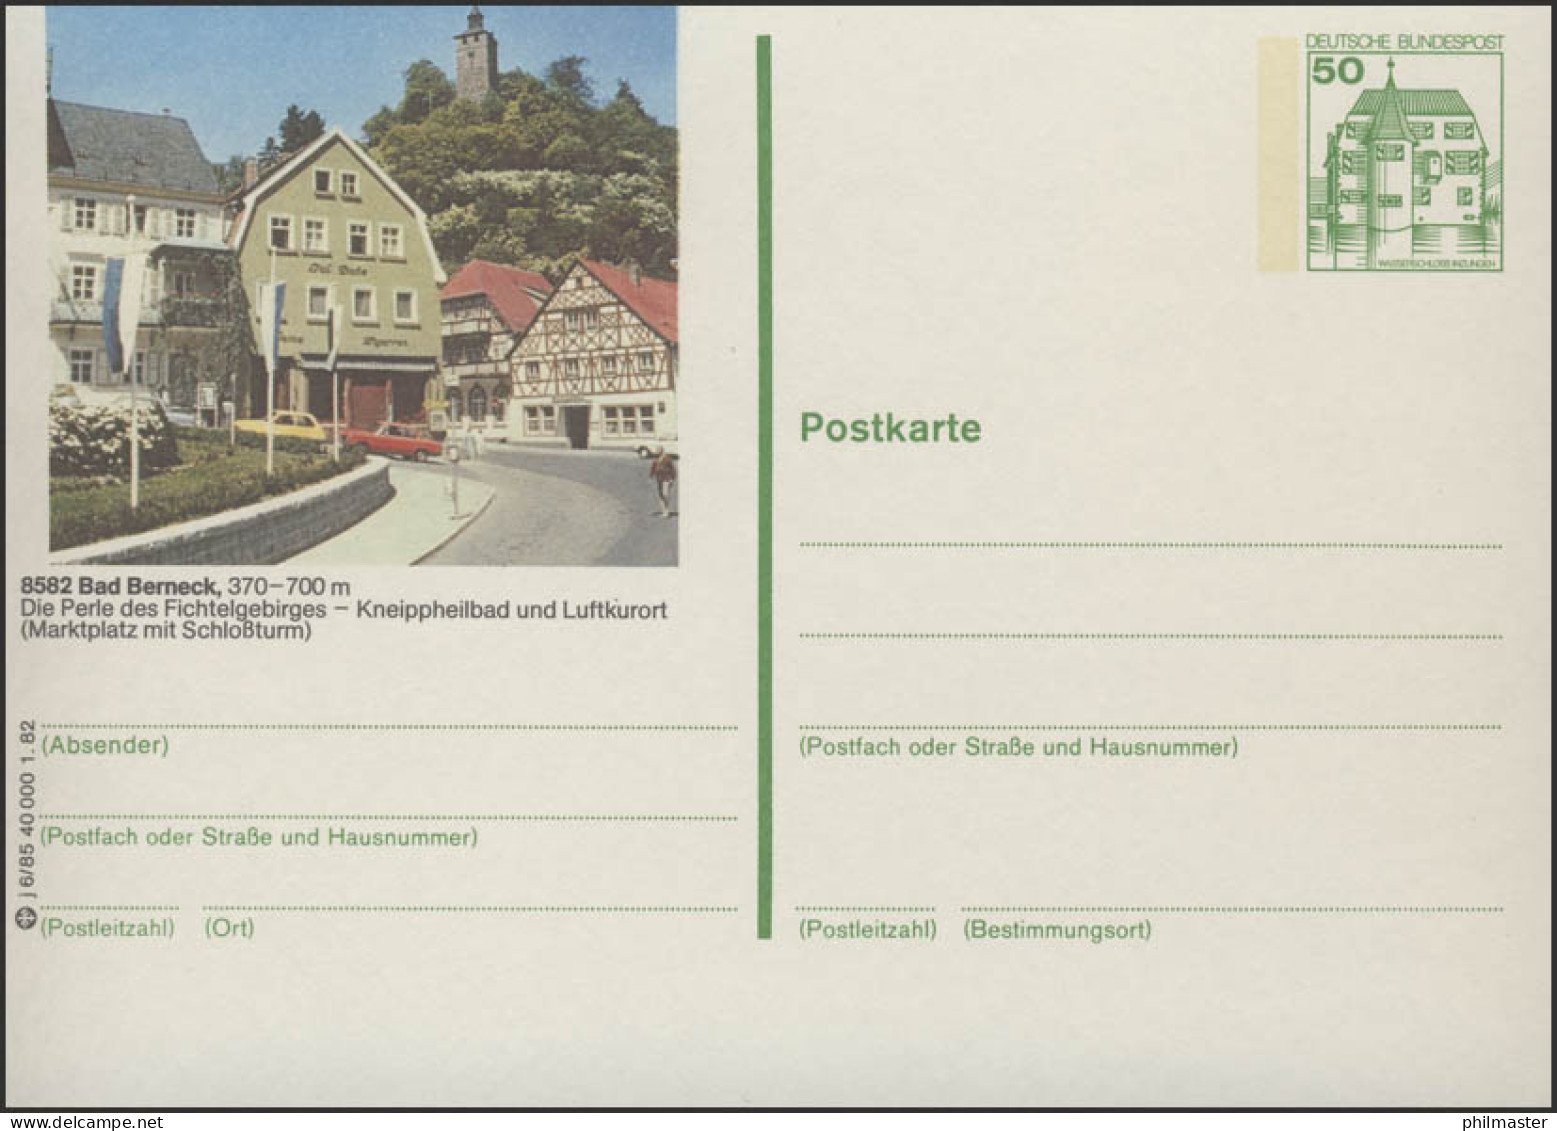 P134-j6/085 8582 Bad Berneck - Marktplatz Schloßturm ** - Illustrated Postcards - Mint